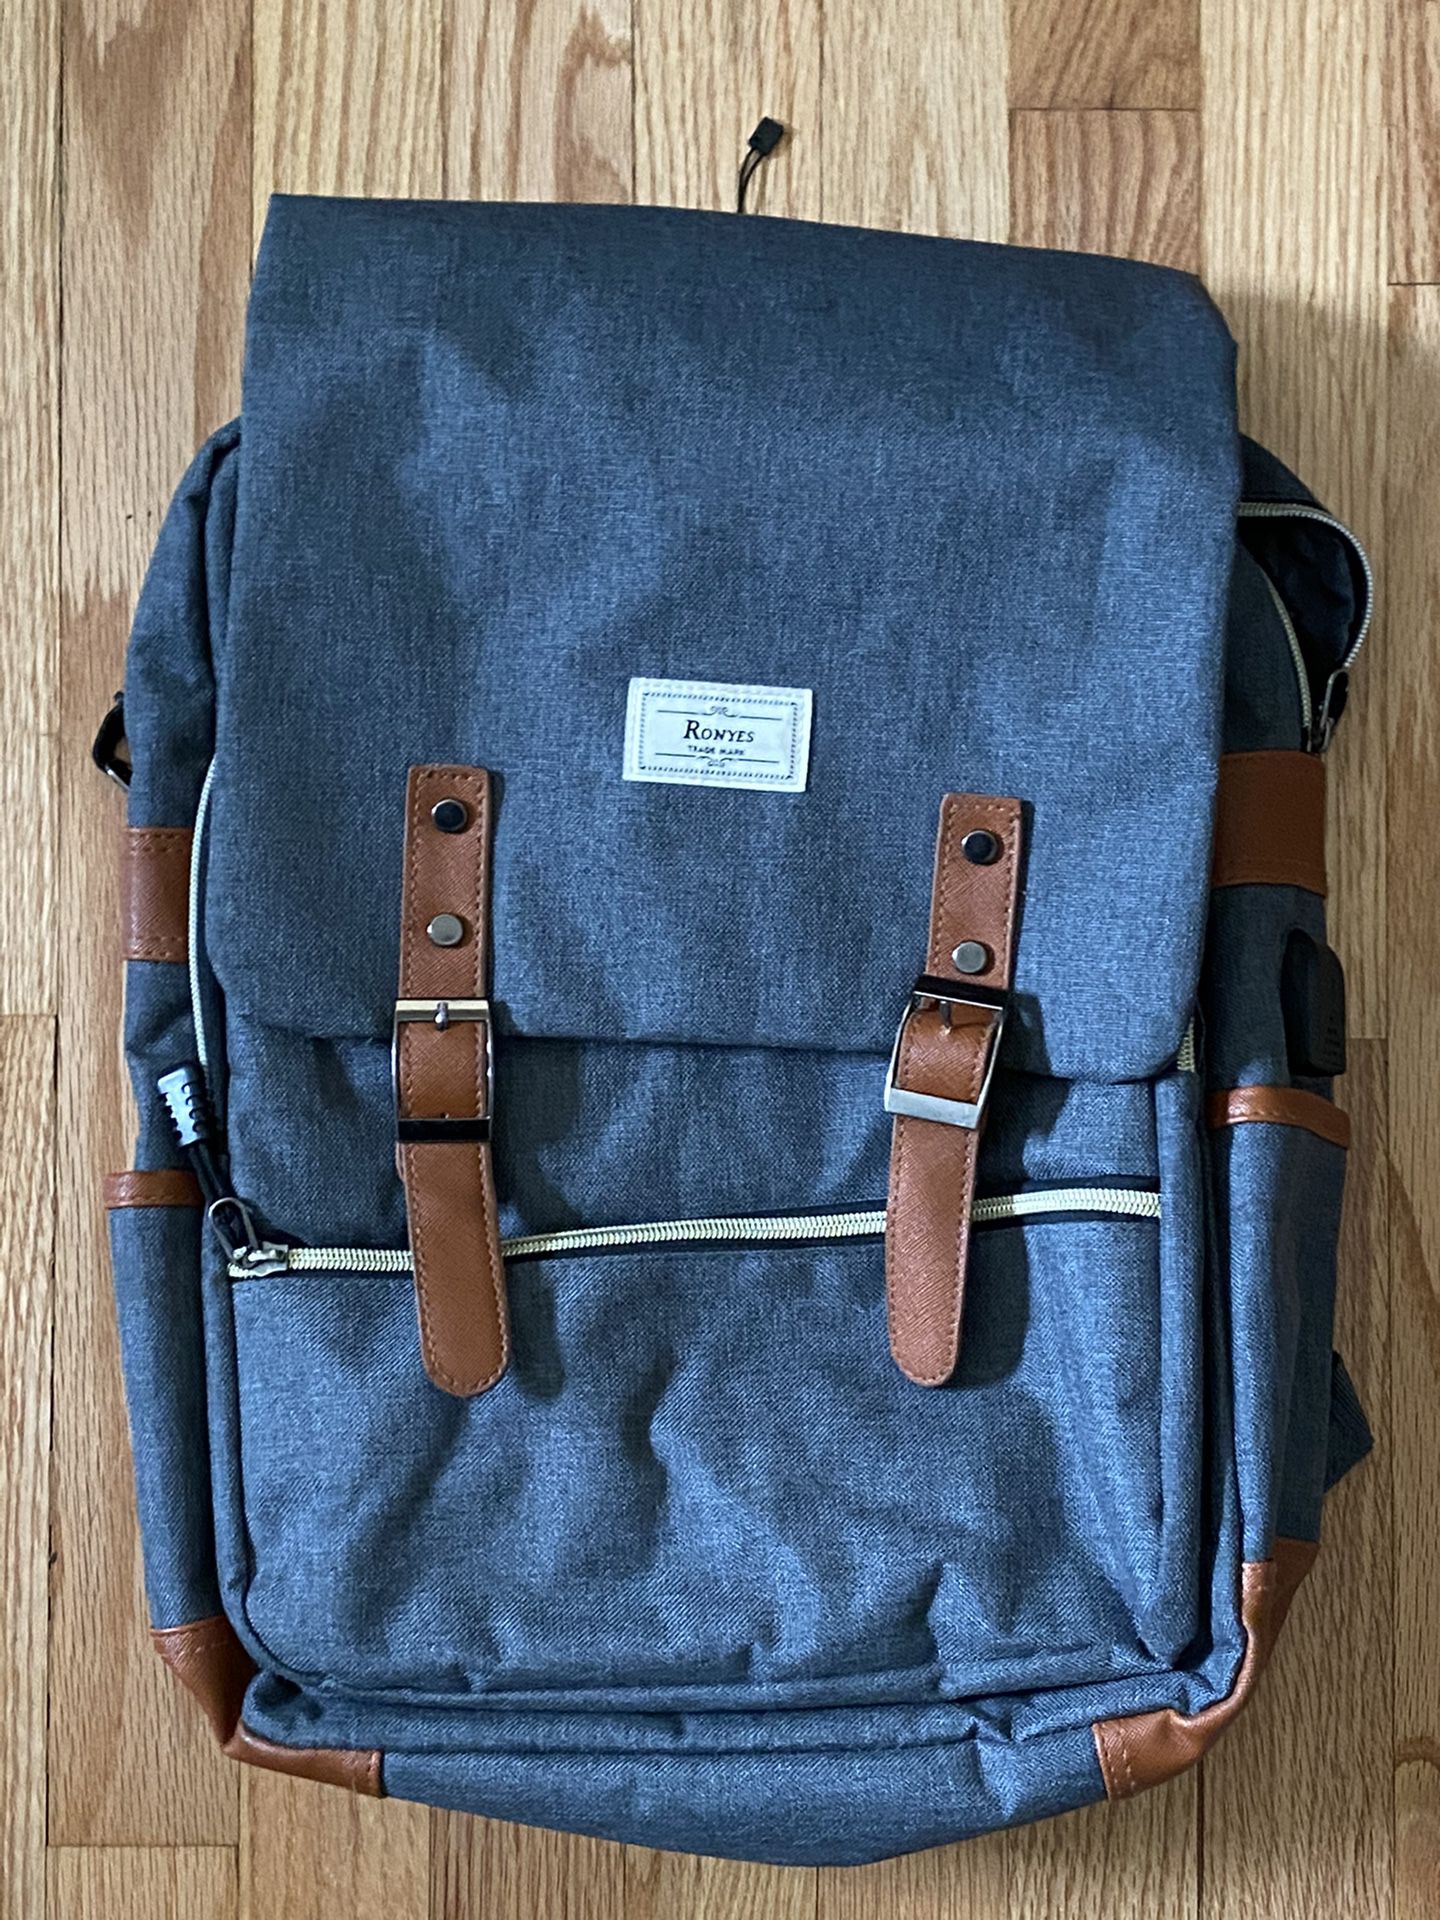 Royles commuter/travel laptop backpack